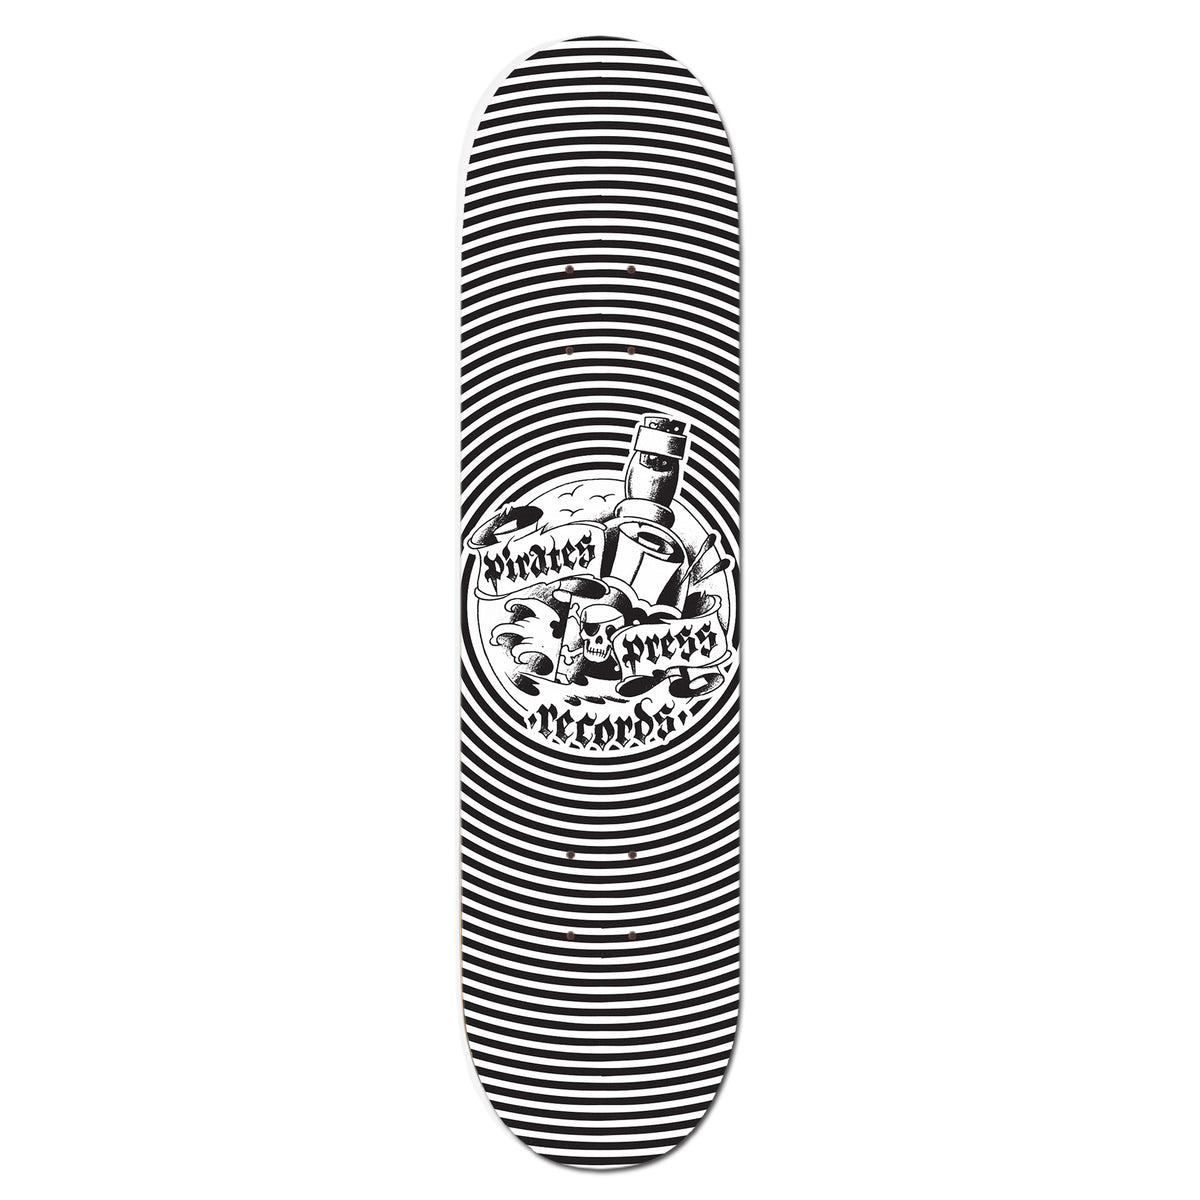 Pirates Press Records - Bottle - Skateboard Deck